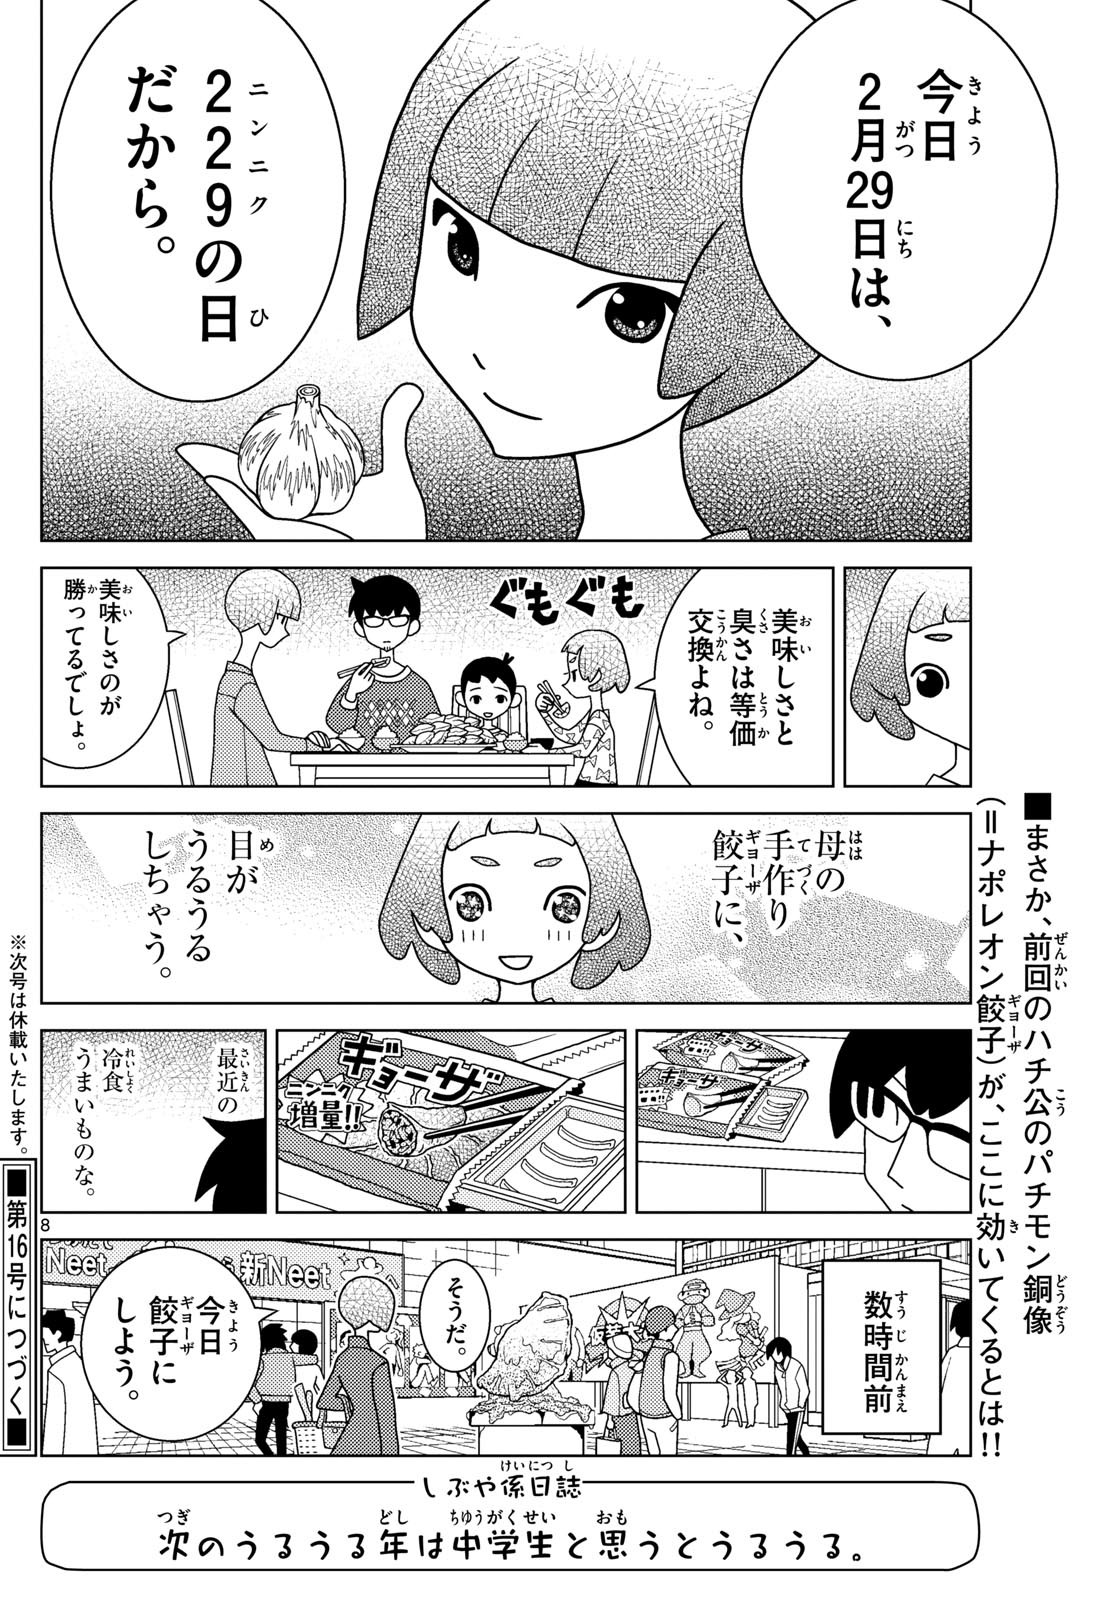 Shibuya Near Family - Chapter 088 - Page 8